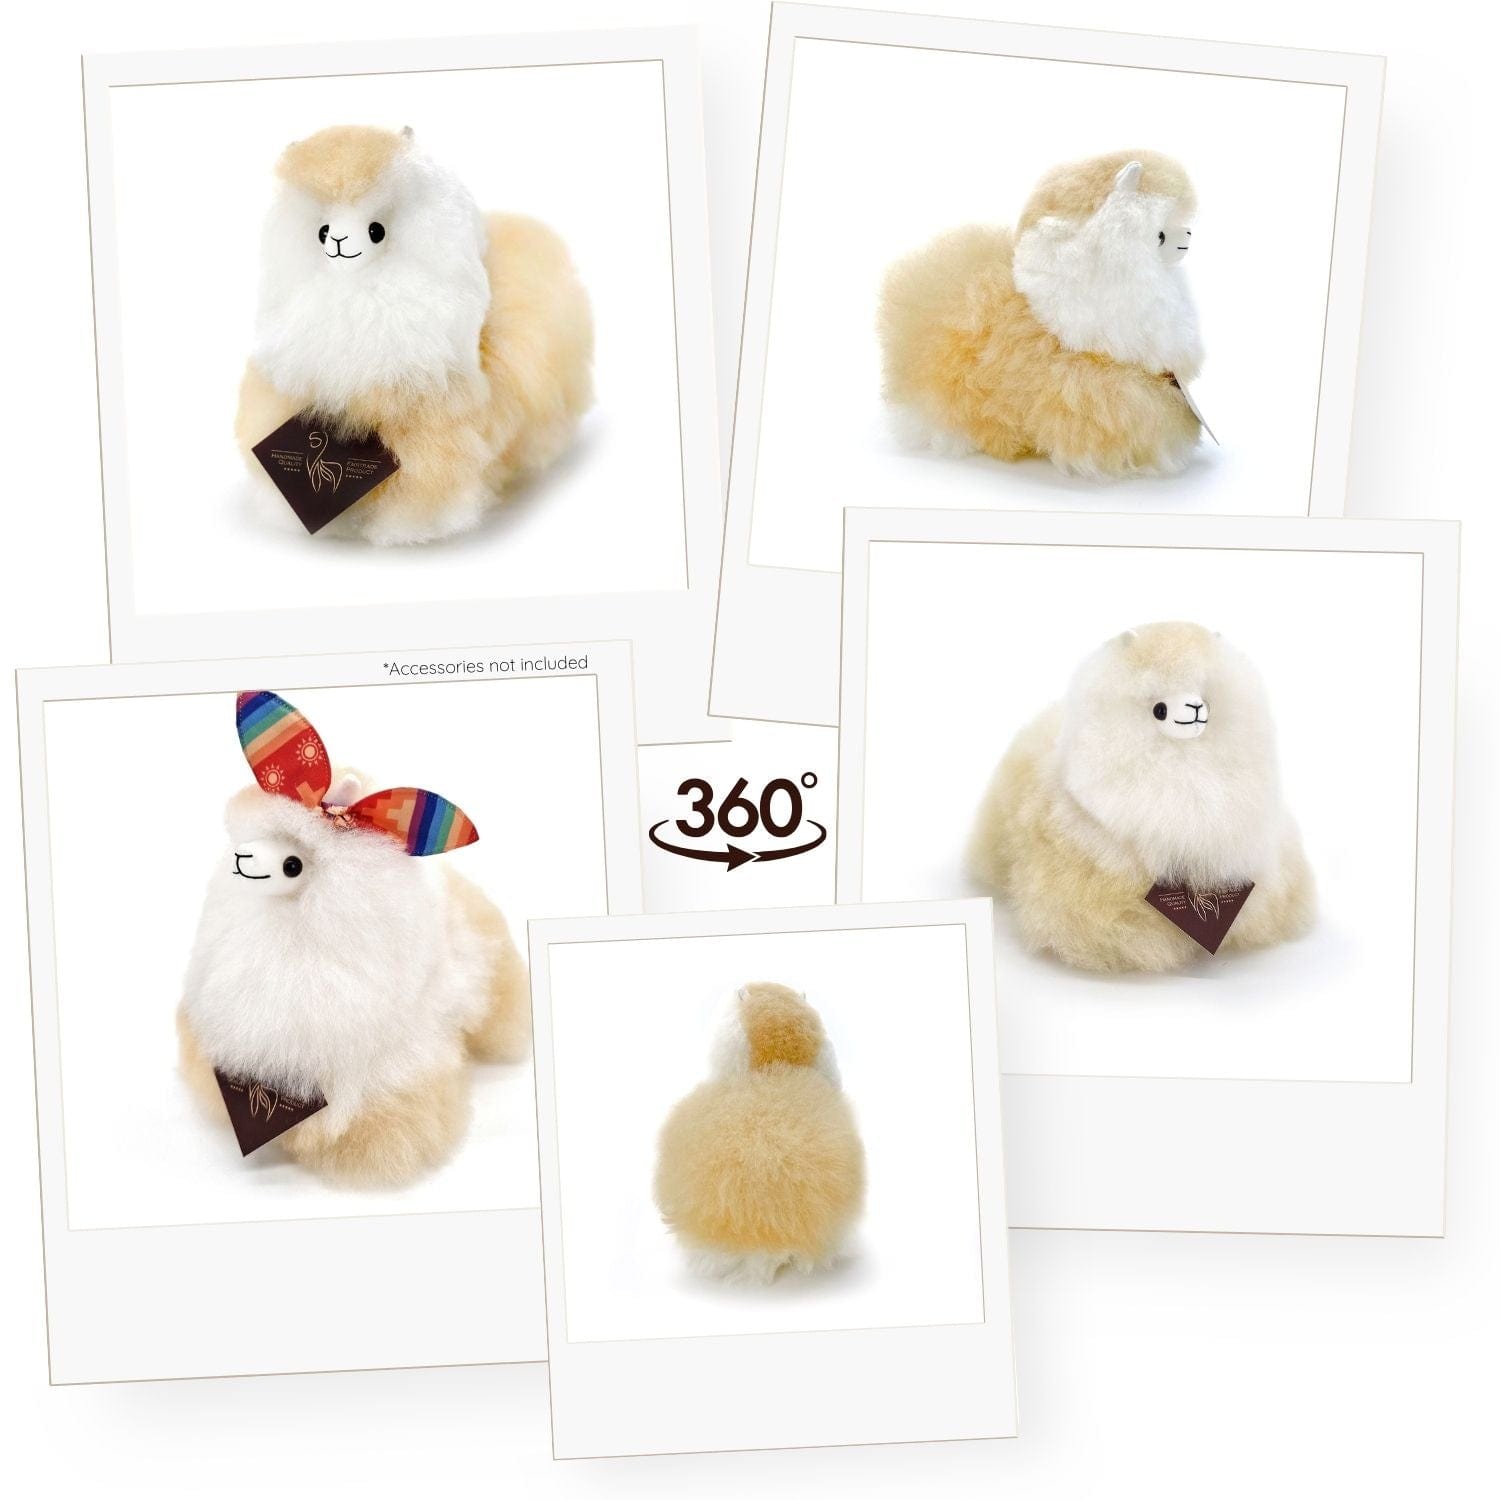 Baristas - Mini (15cm) - Alpaca Stuffed Animal